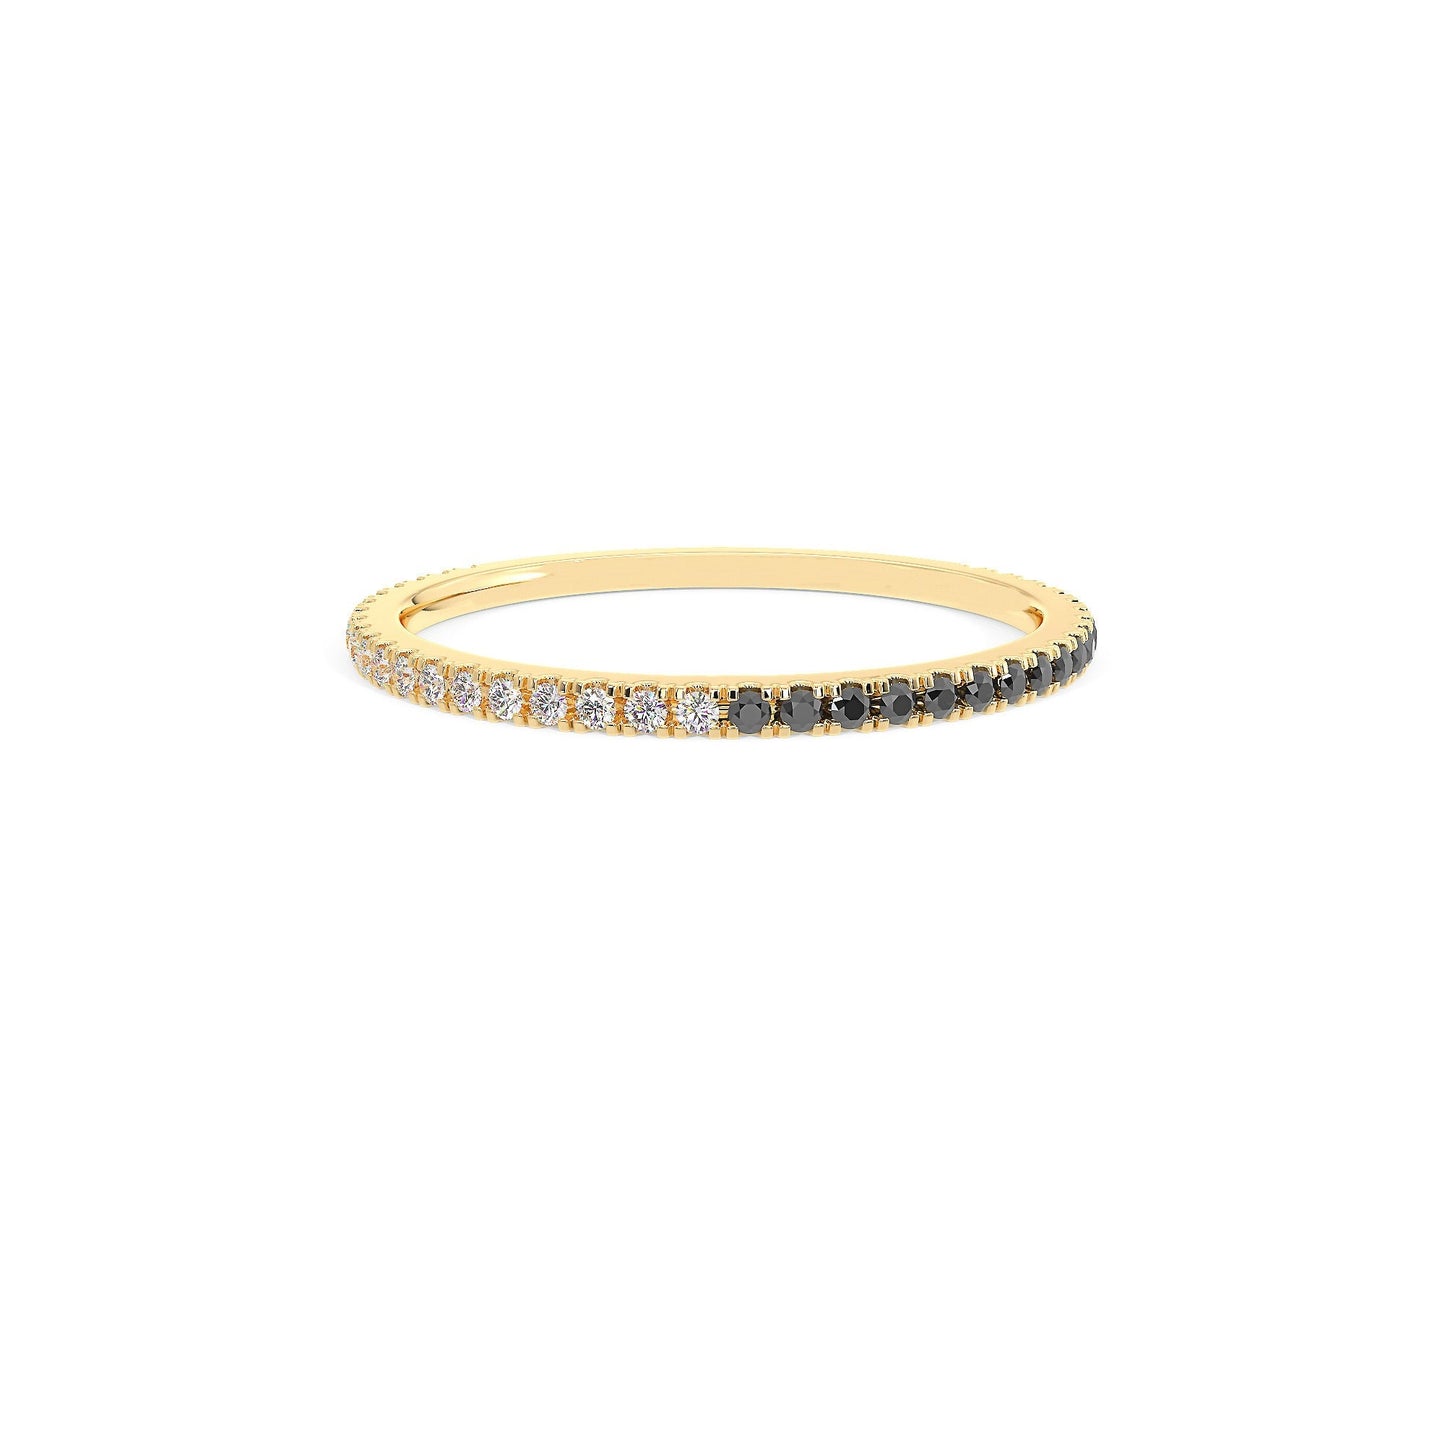 Black and White Diamond Wedding Band, Wedding Ring 14k Gold, Three-quarter Circle of Micro Pave Diamond Band, Handmade Jewelry